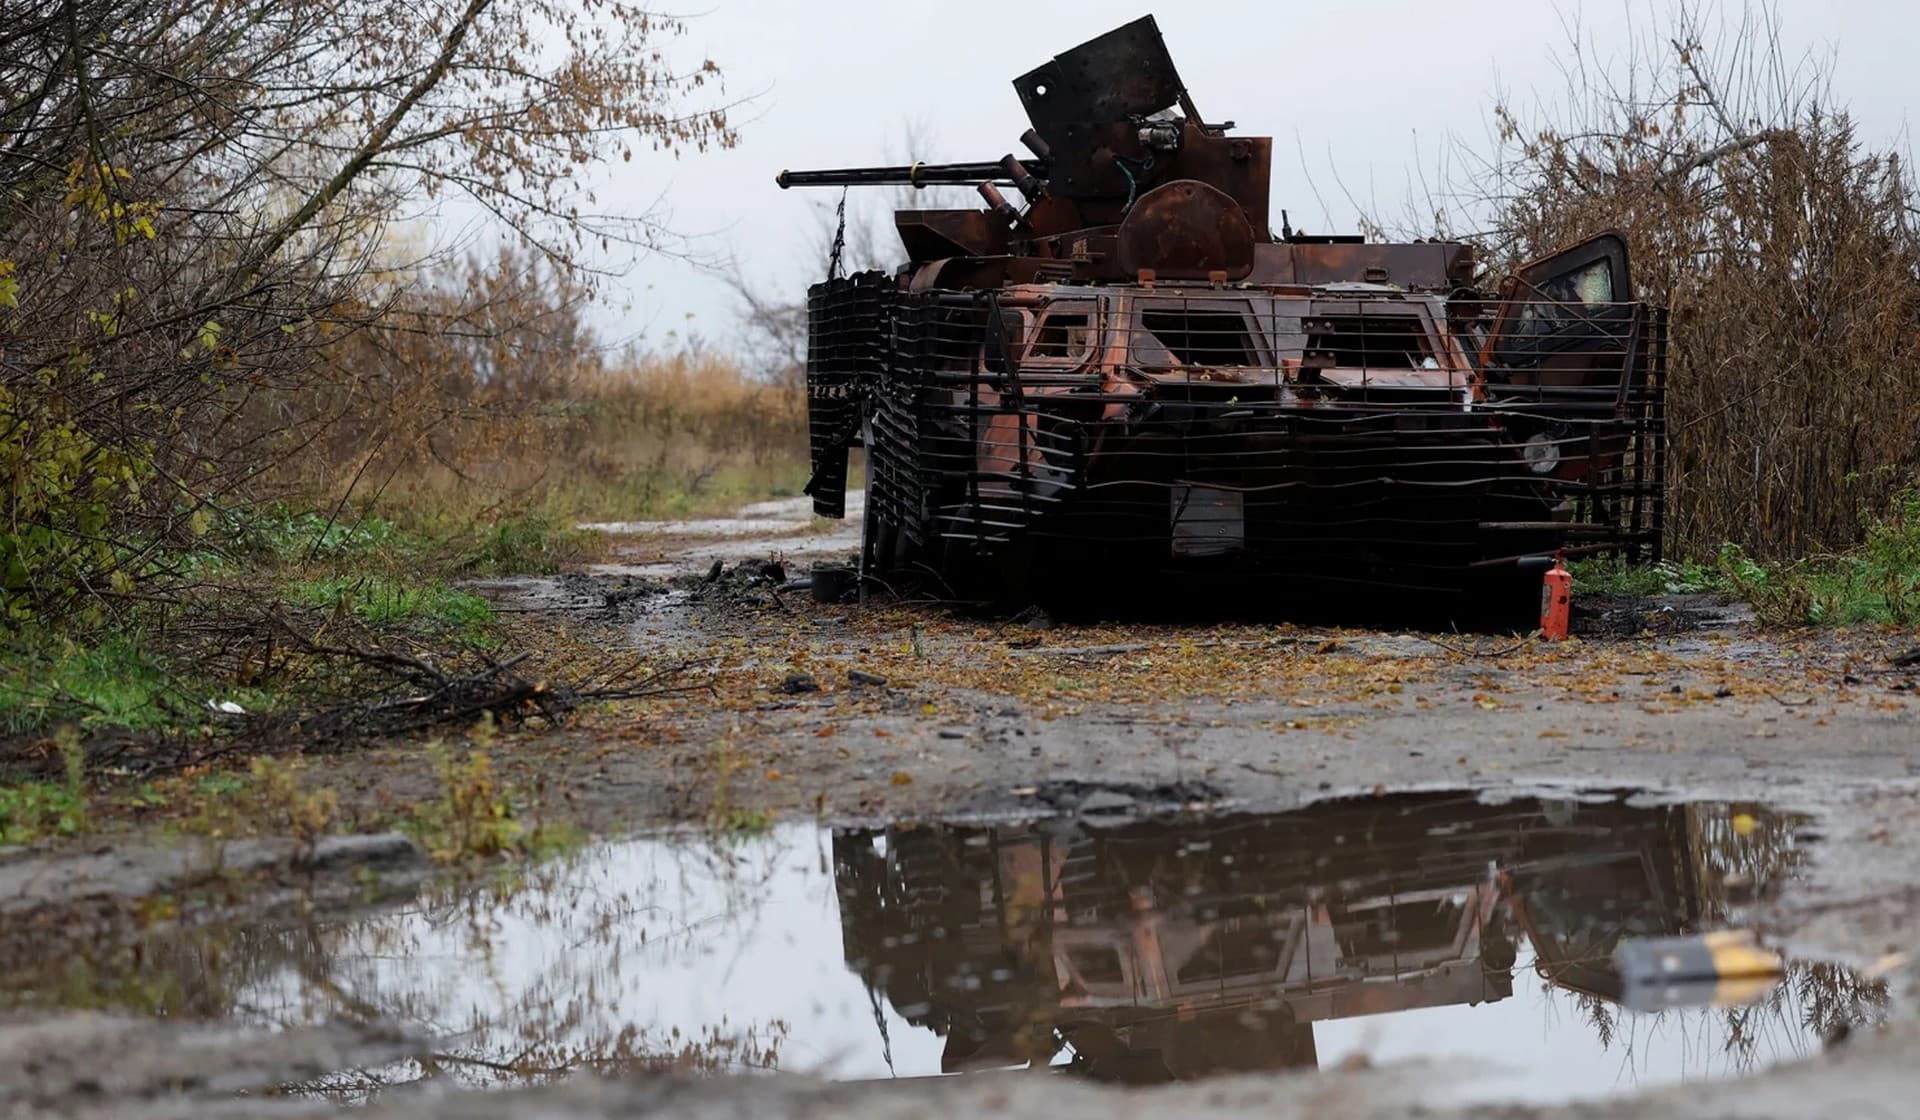 A tank in Tsupivka